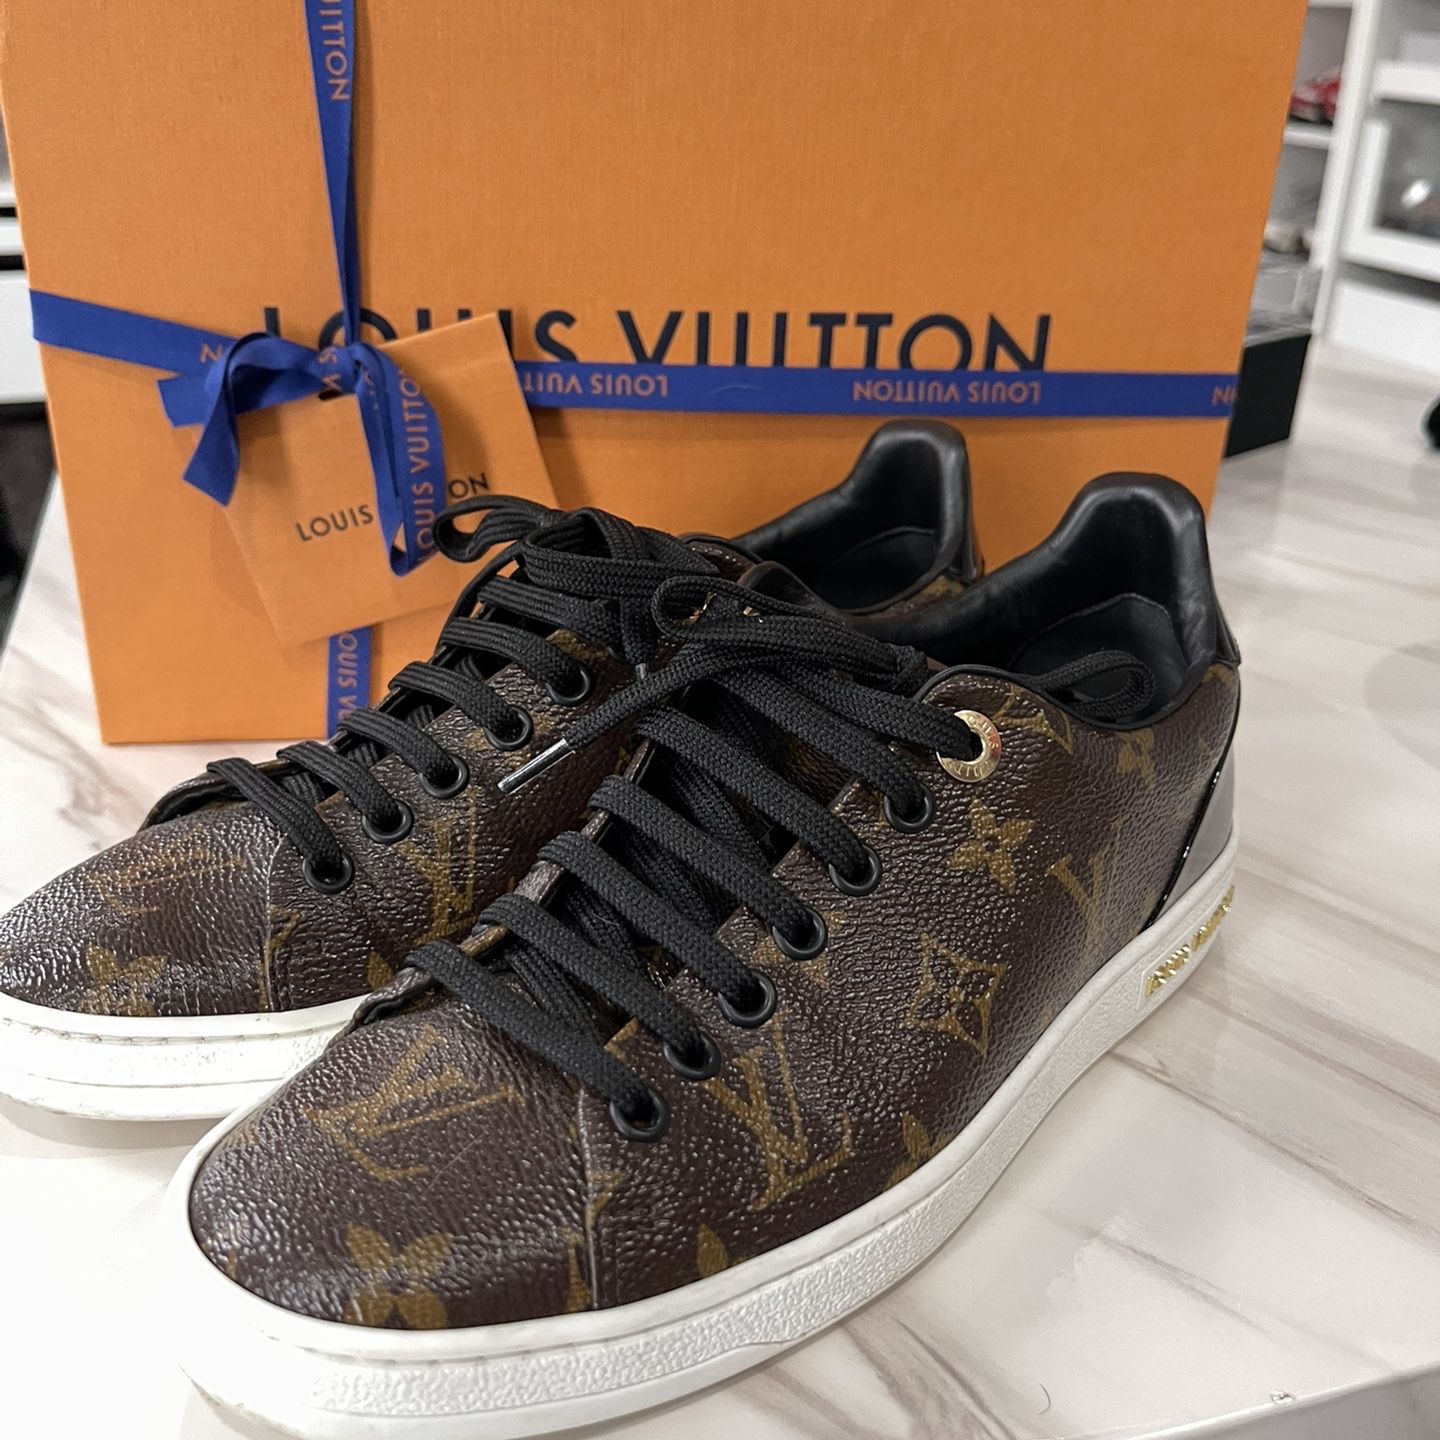 Louis Vuitton Frontrow sneaker - reverse - Depop